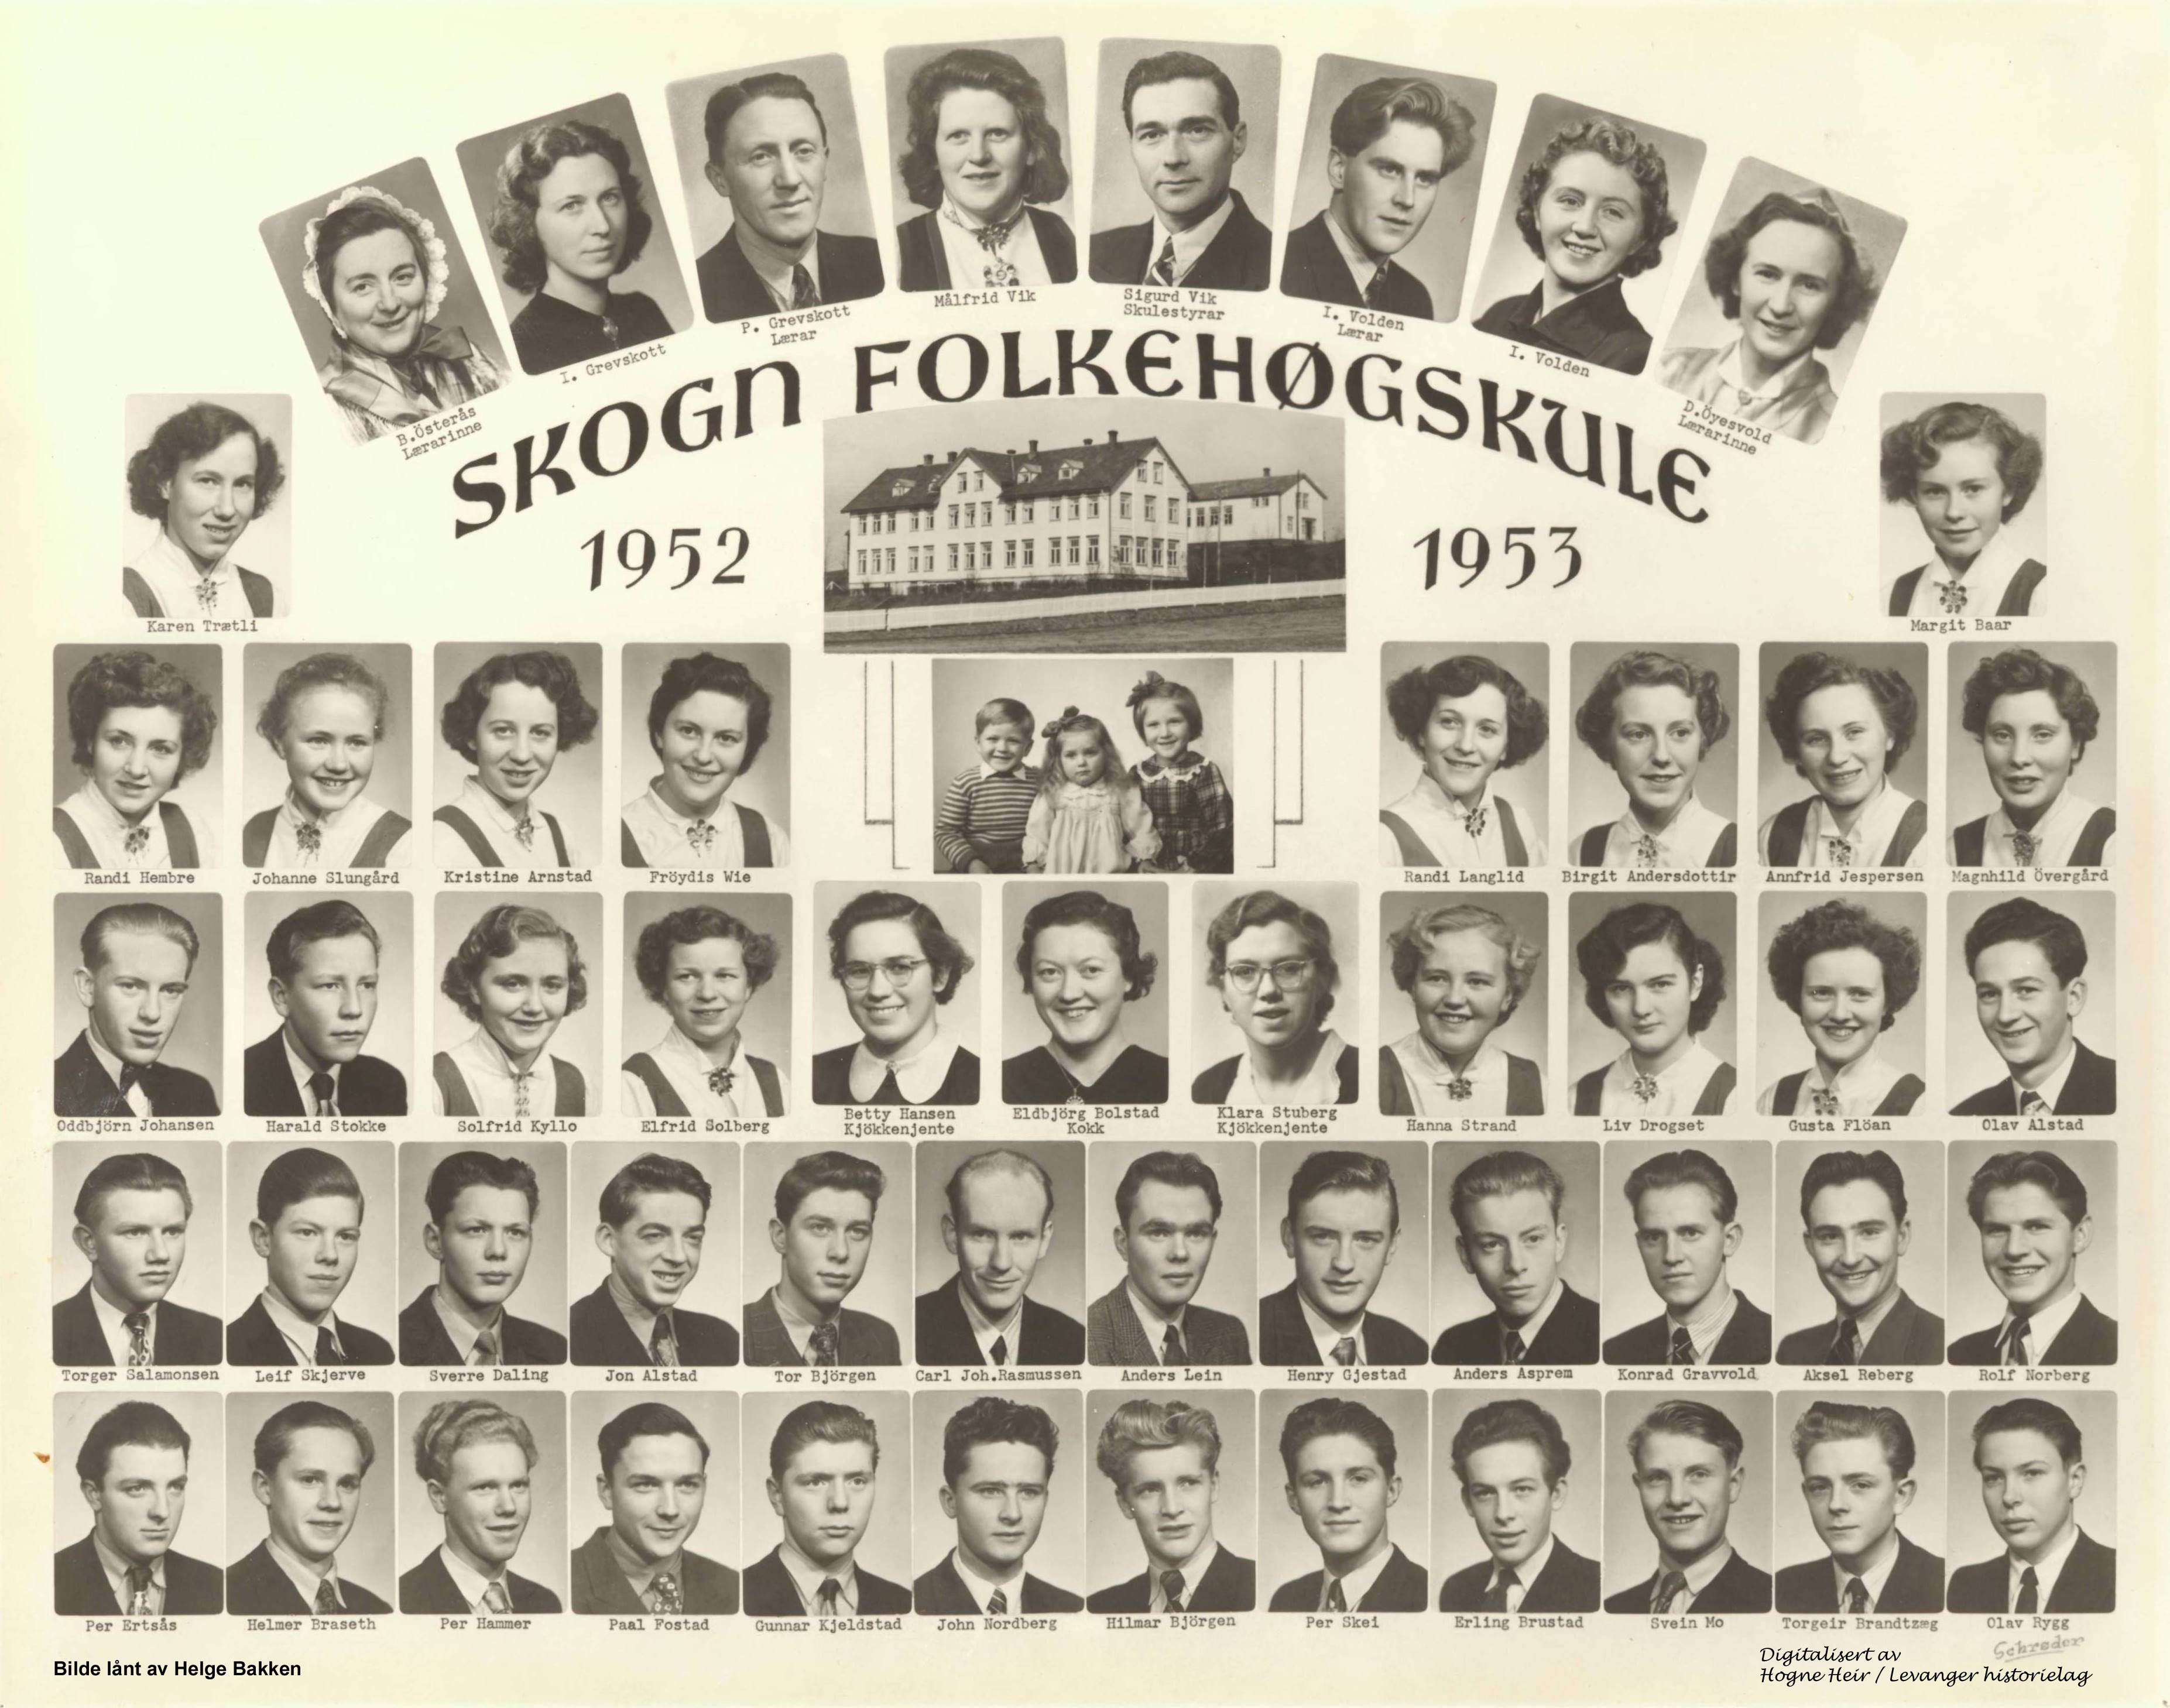 Skogn folkehøgskule 1952-1953